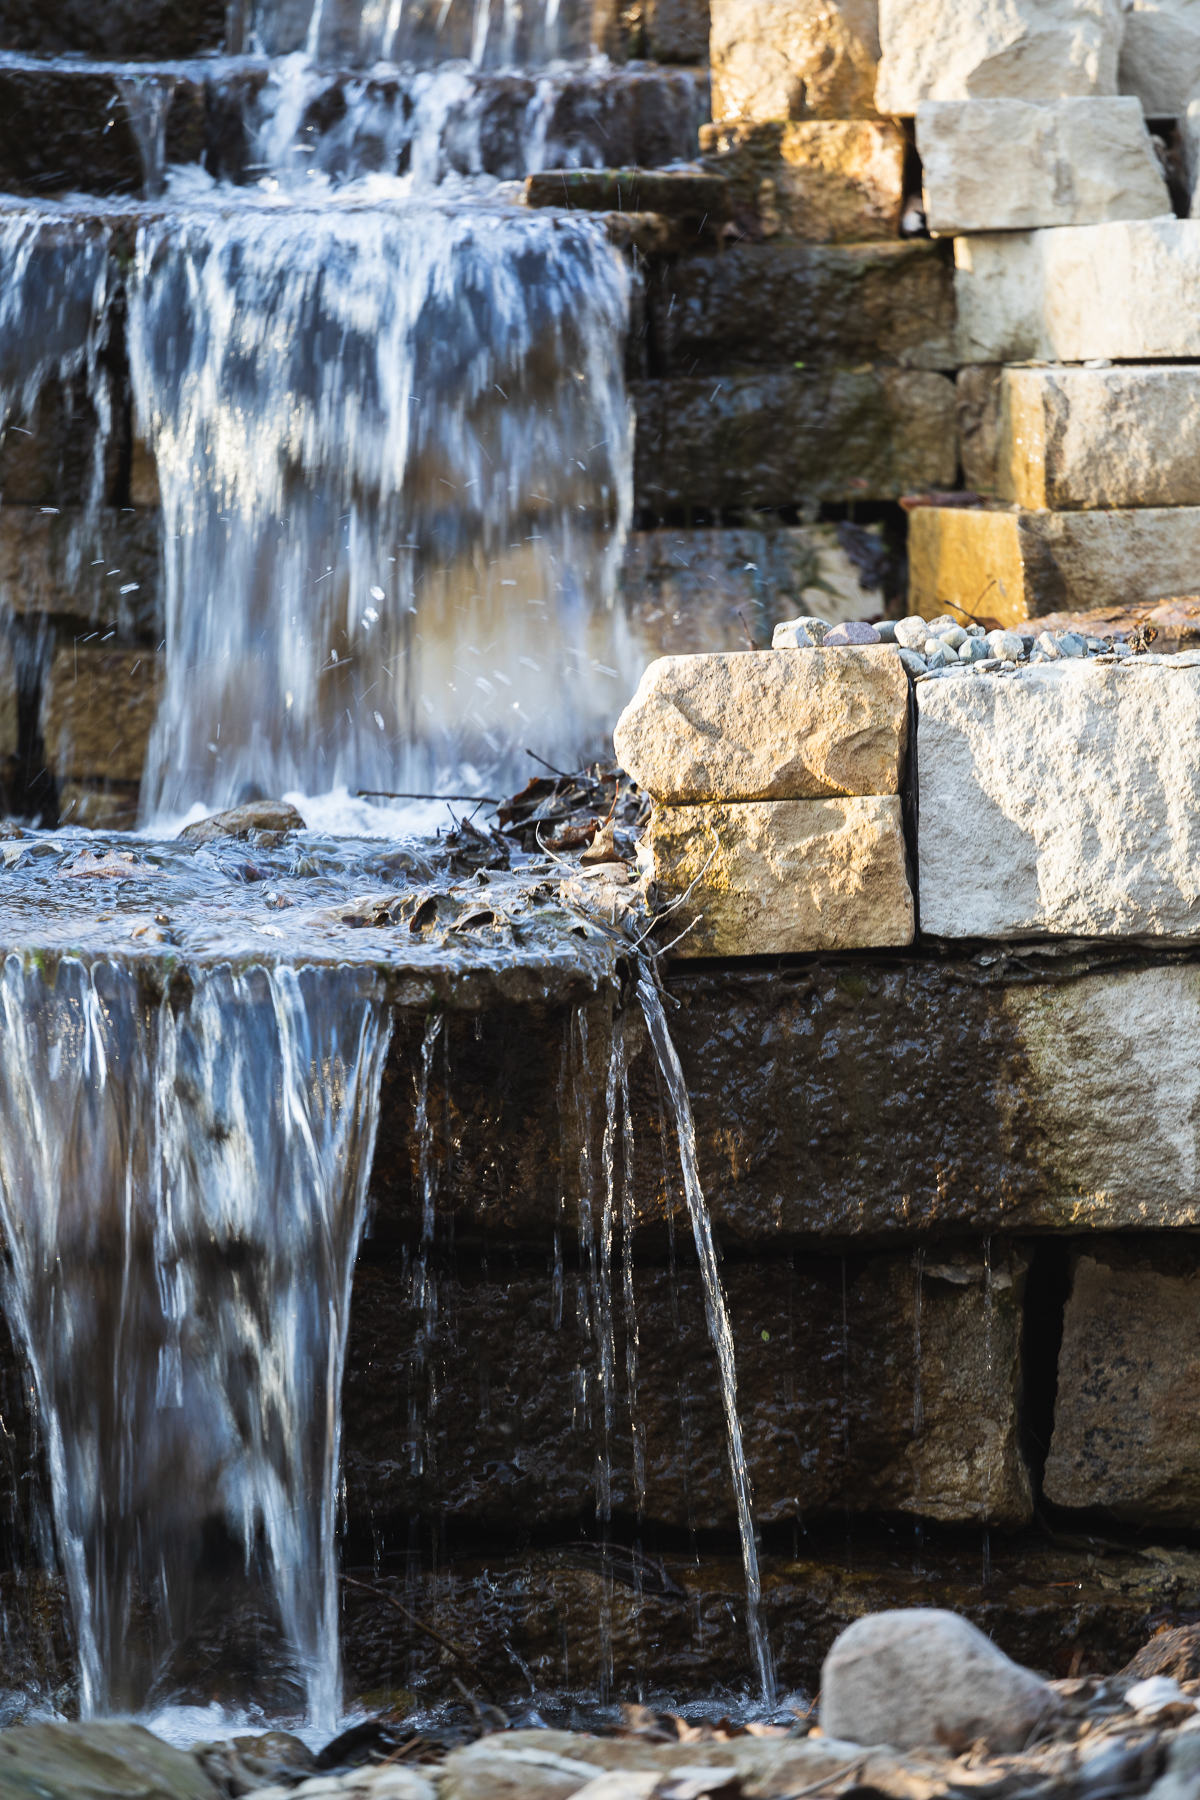 Water joyfully flows over steps made of rough-hewn, rectangular stone. 